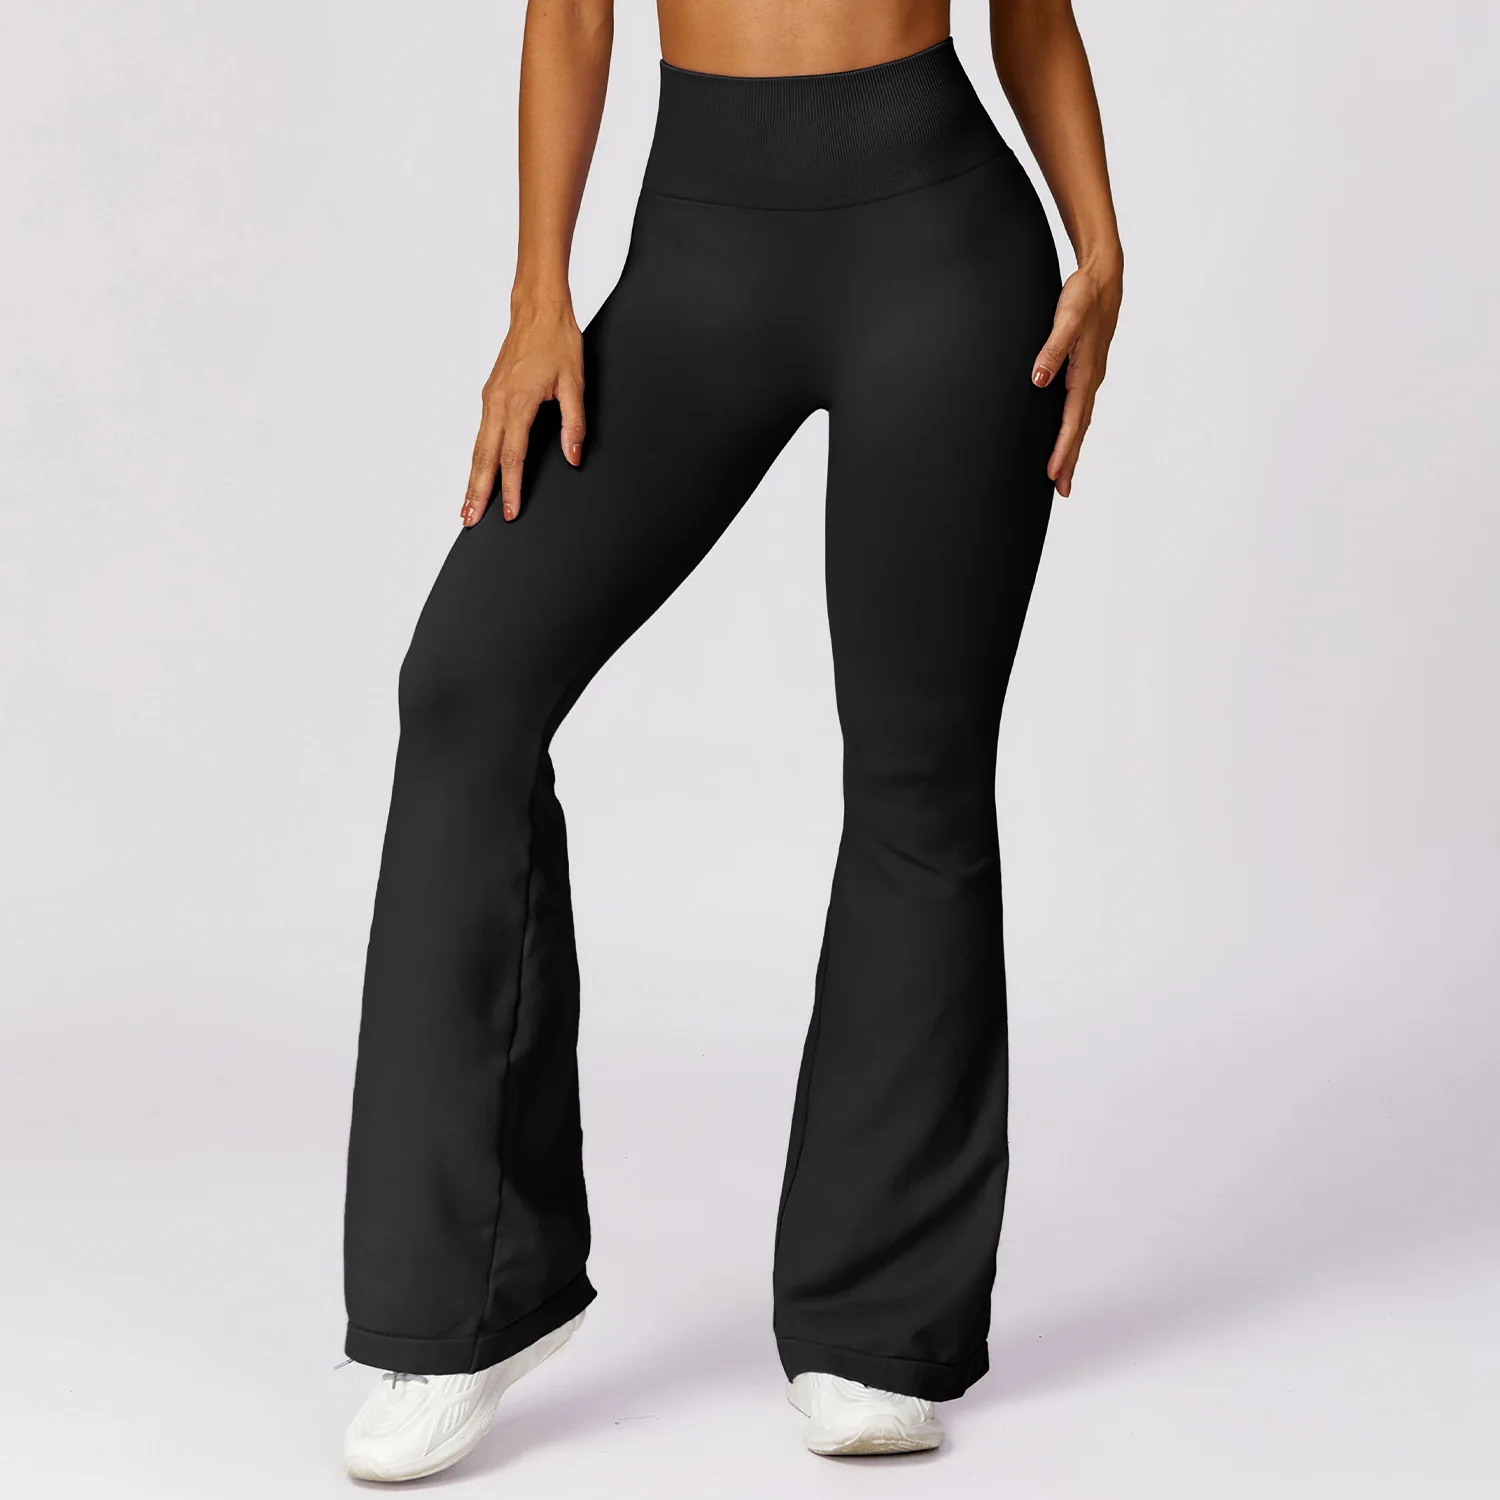 Custom High Elastic Breathable Gym Sportswear Women Flare Leggings Active Sports Yoga Outfit Pants